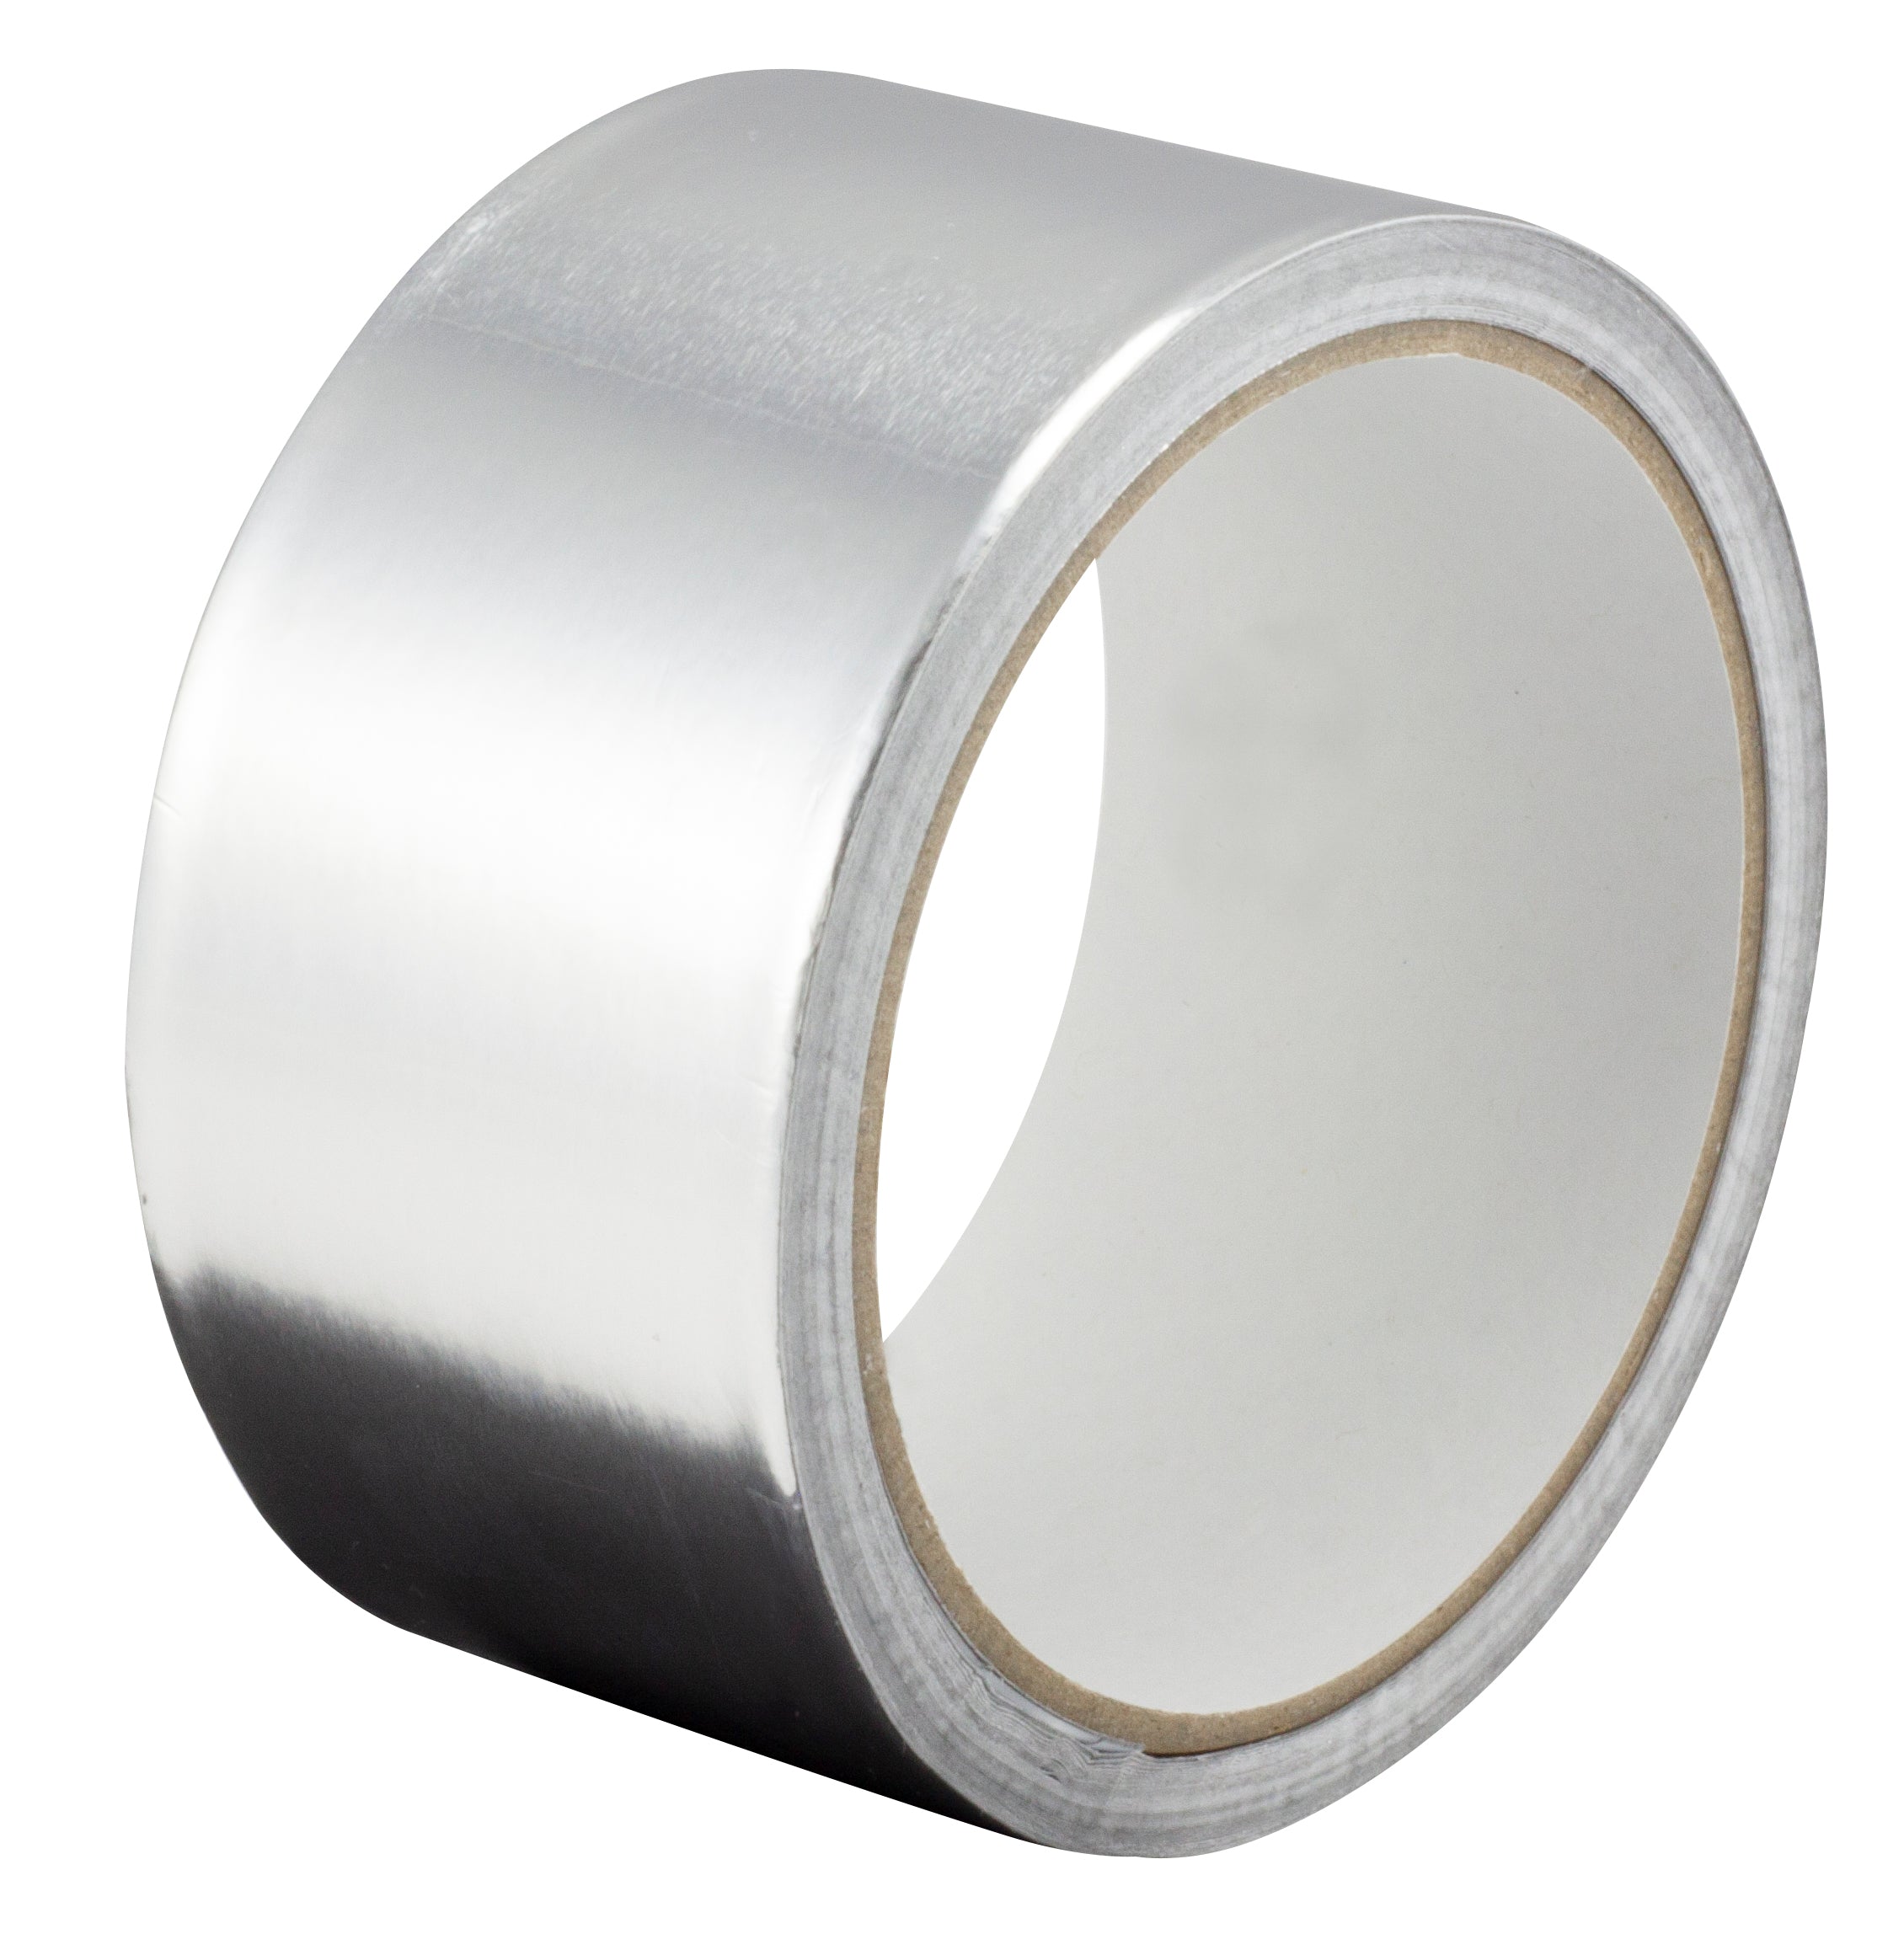 Aluminium Foil Tape 48mm x 10m 40 Micron Thickness. Adhesive Type - Per Roll